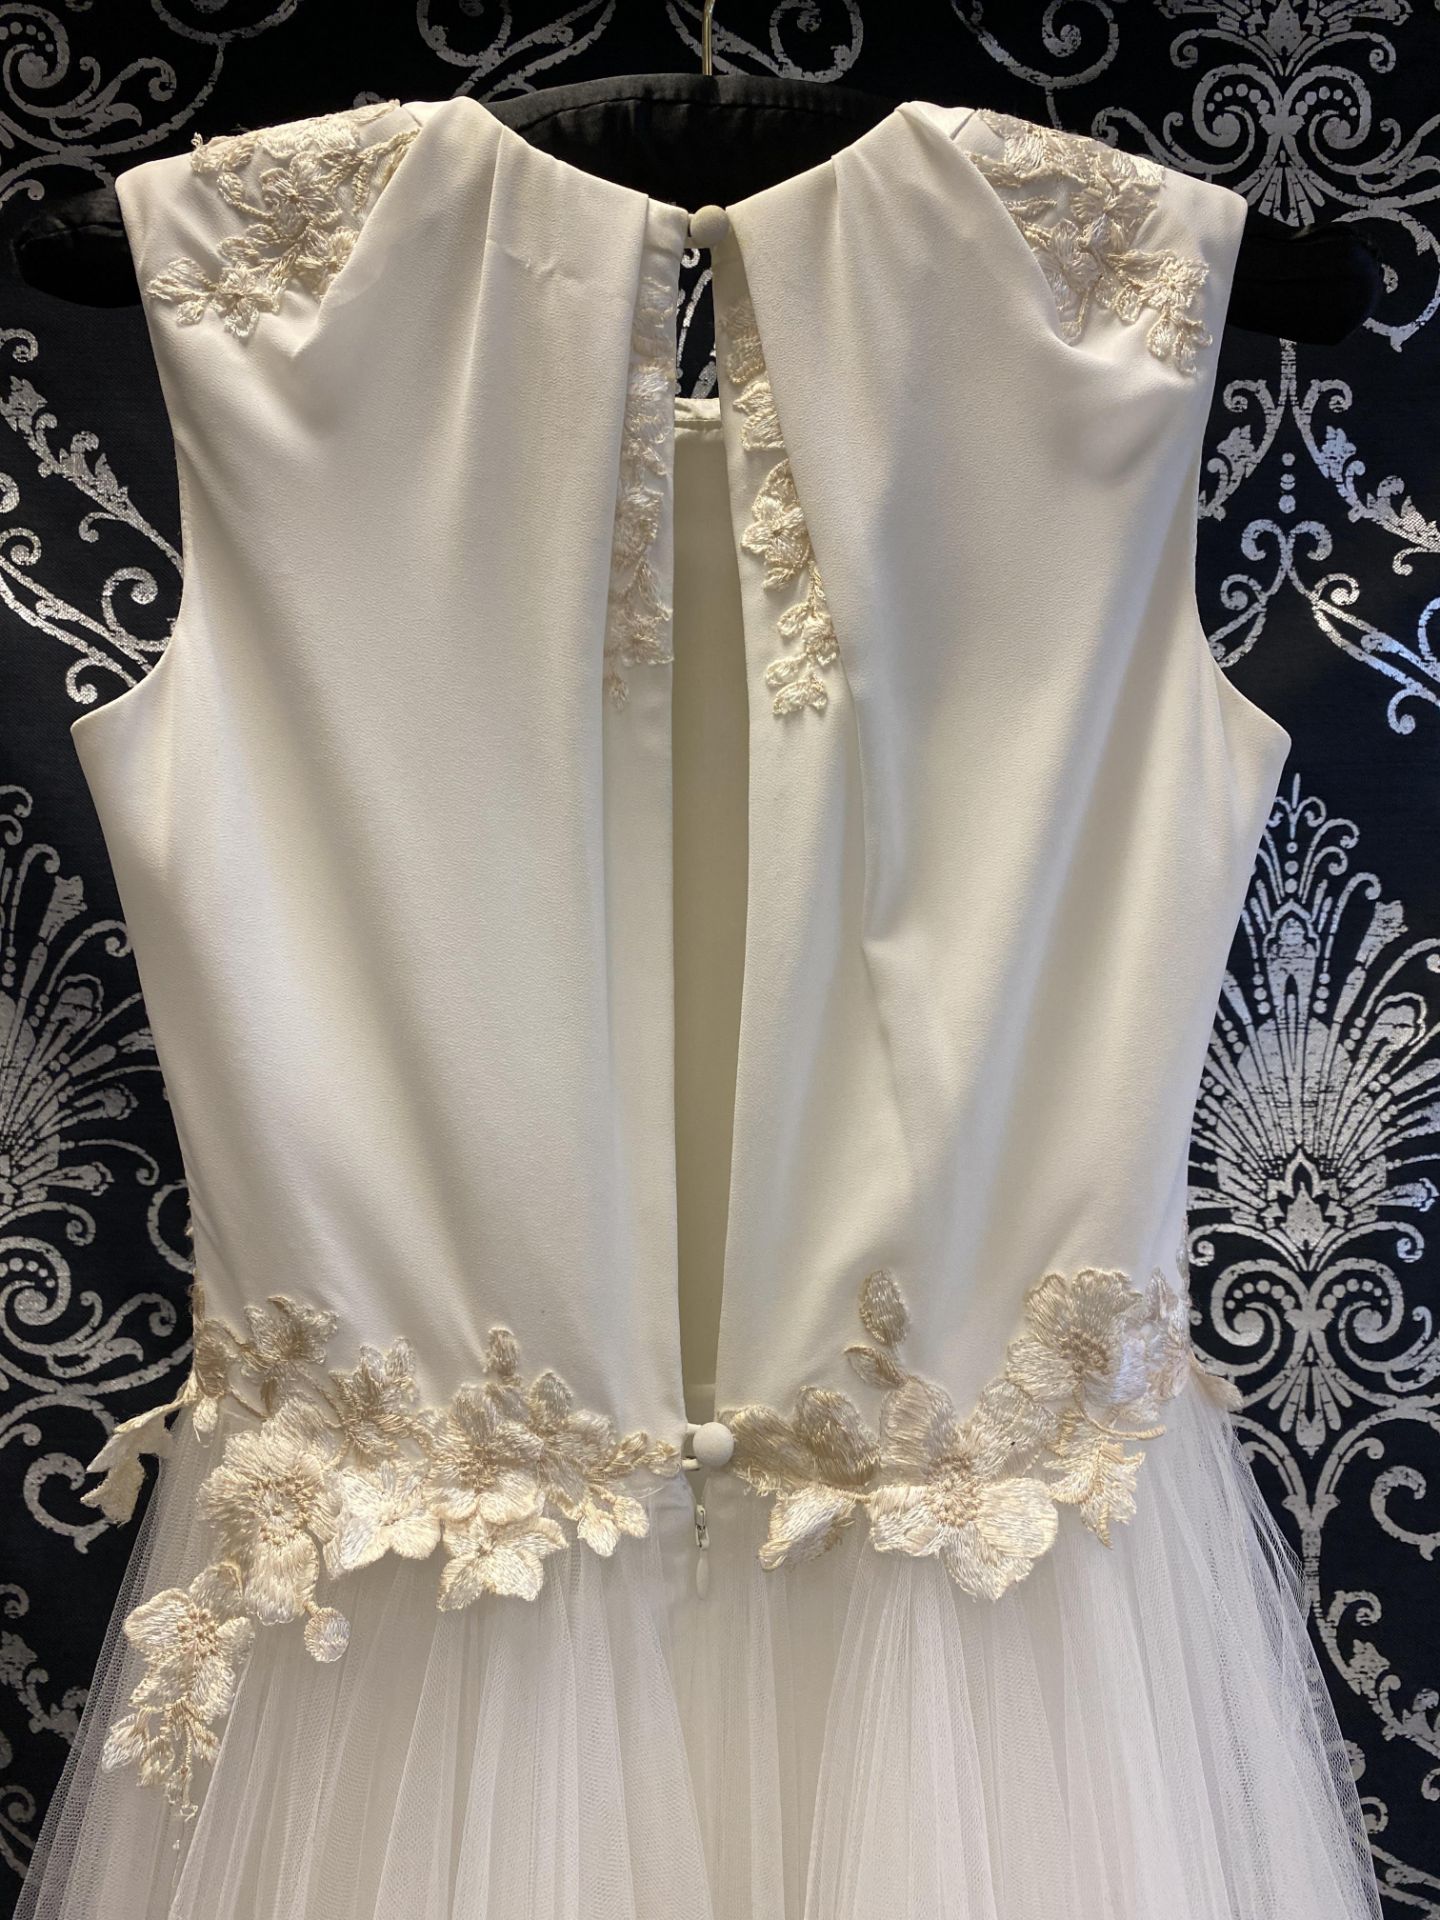 1 x DAVID FIELDEN '8816' Jewel Neck Full Skirted Designer Wedding Dress RRP £2,850 UK 12 - Image 9 of 9